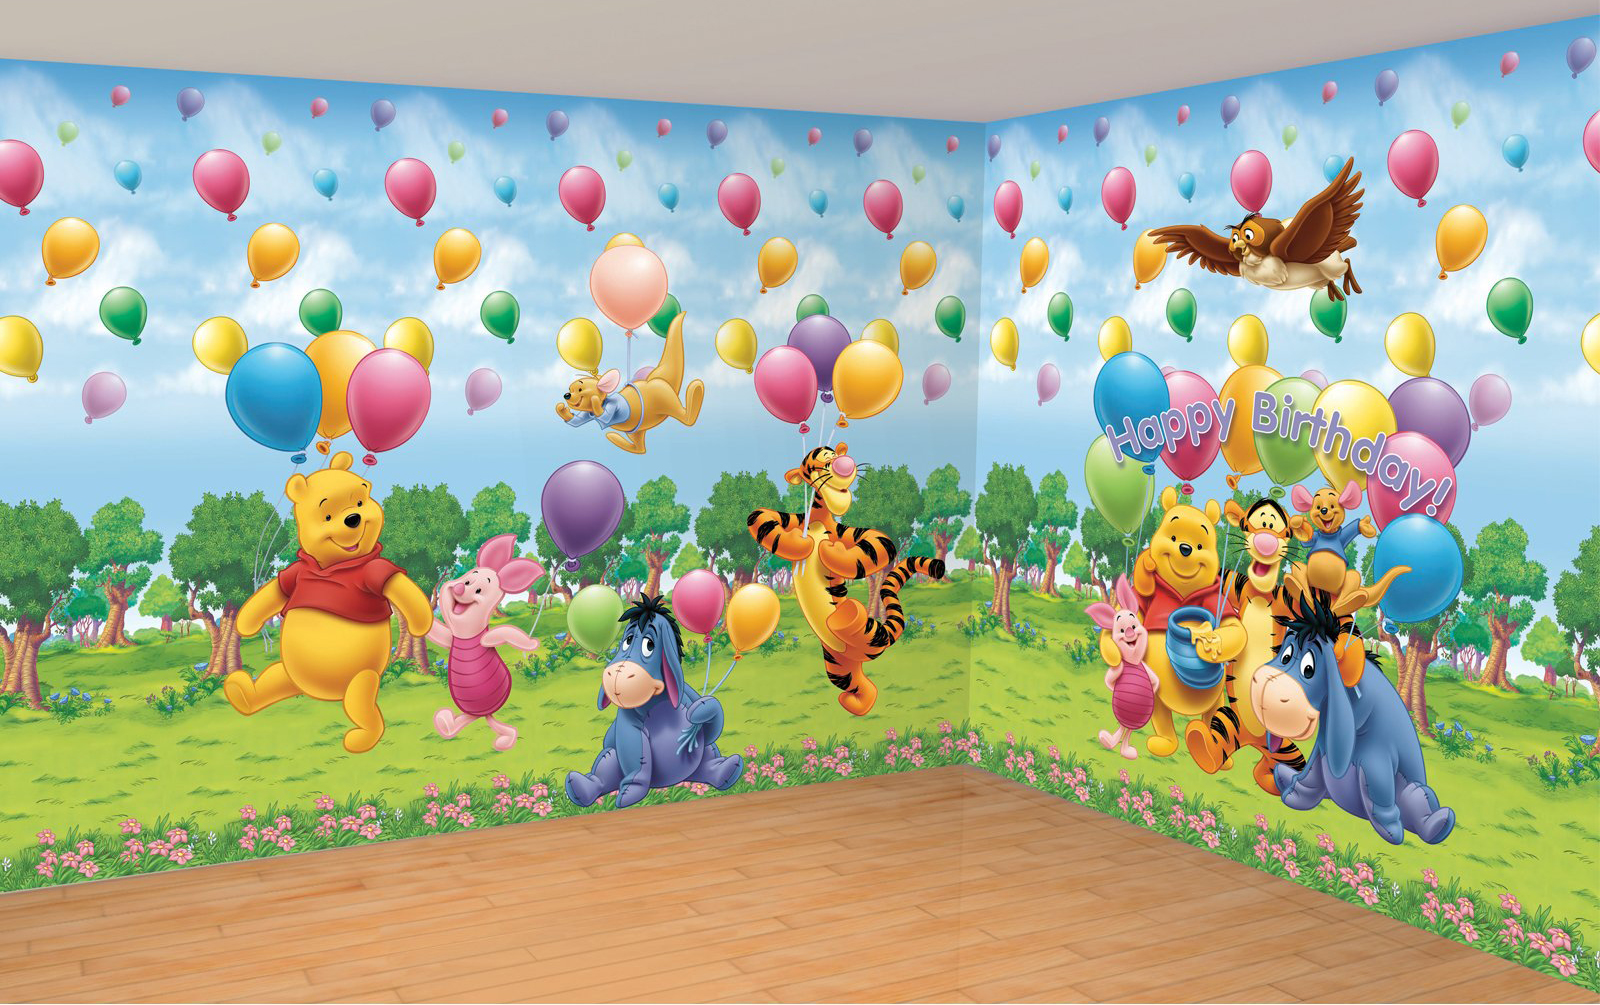 Winnie the Pooh Wallpaper Borderjpg